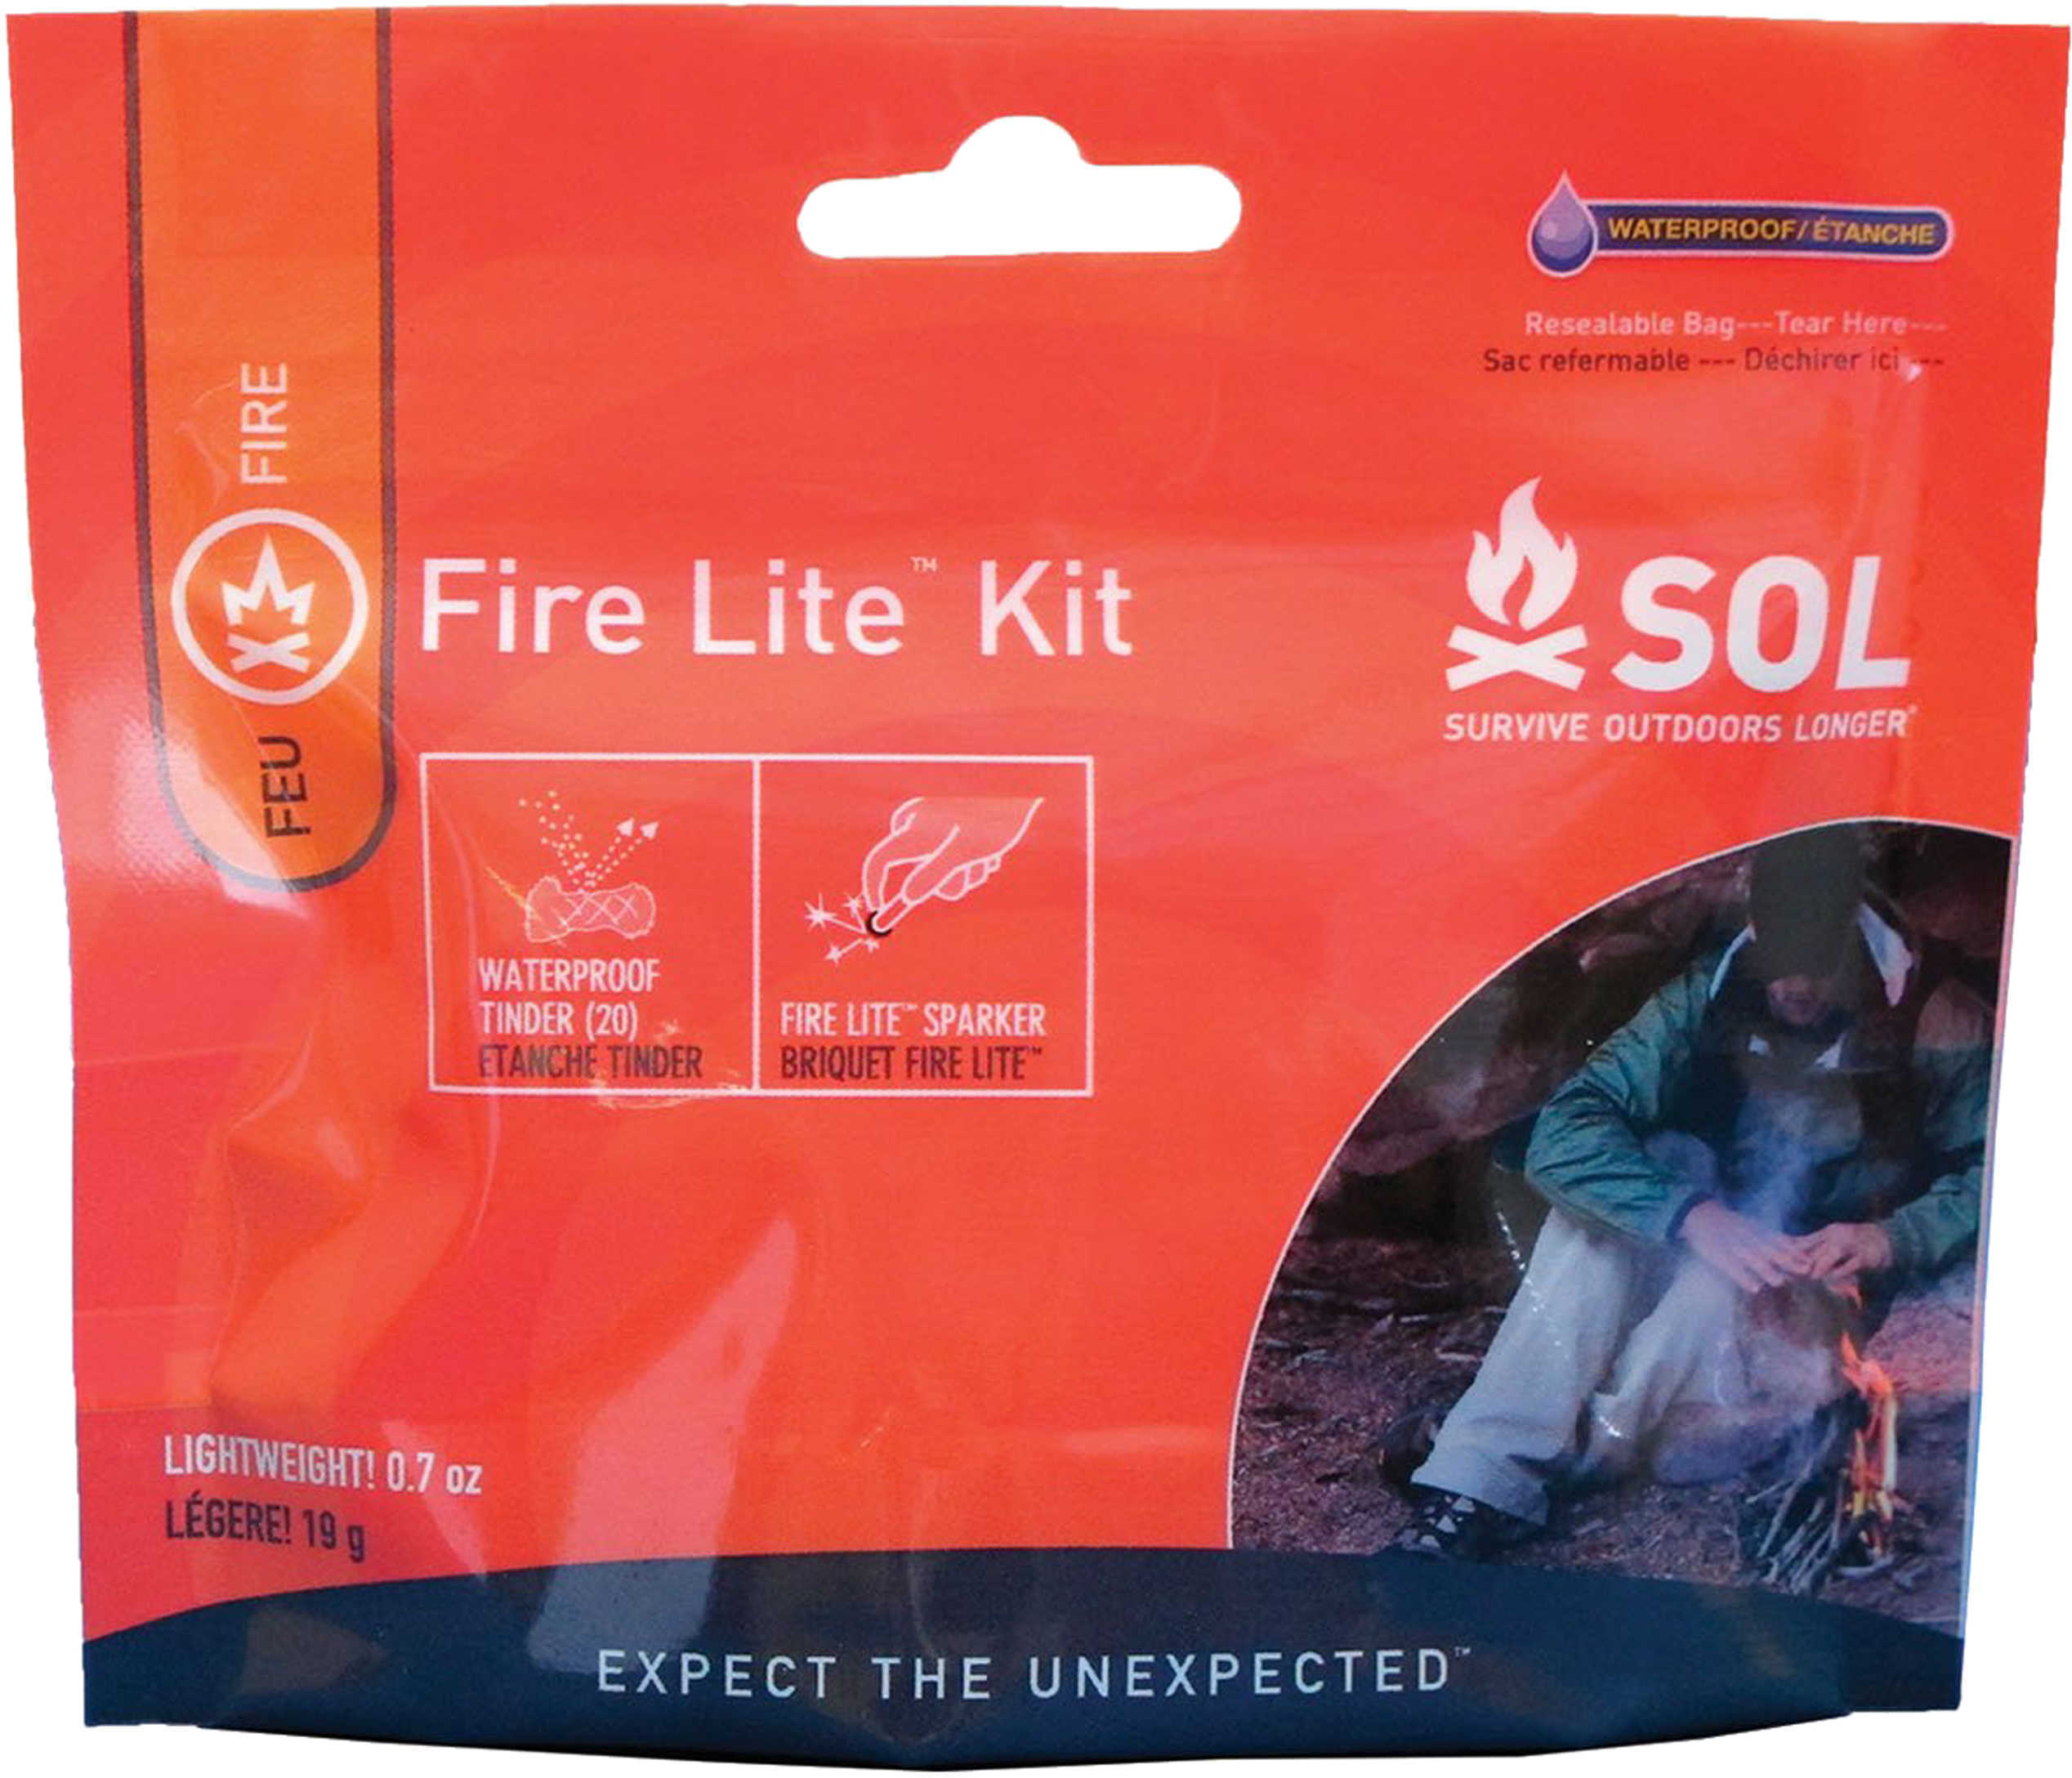 Survive Outdoors Longer / Tender Corp Adventure Medical Kits Sol Fire Light Kit 01401230